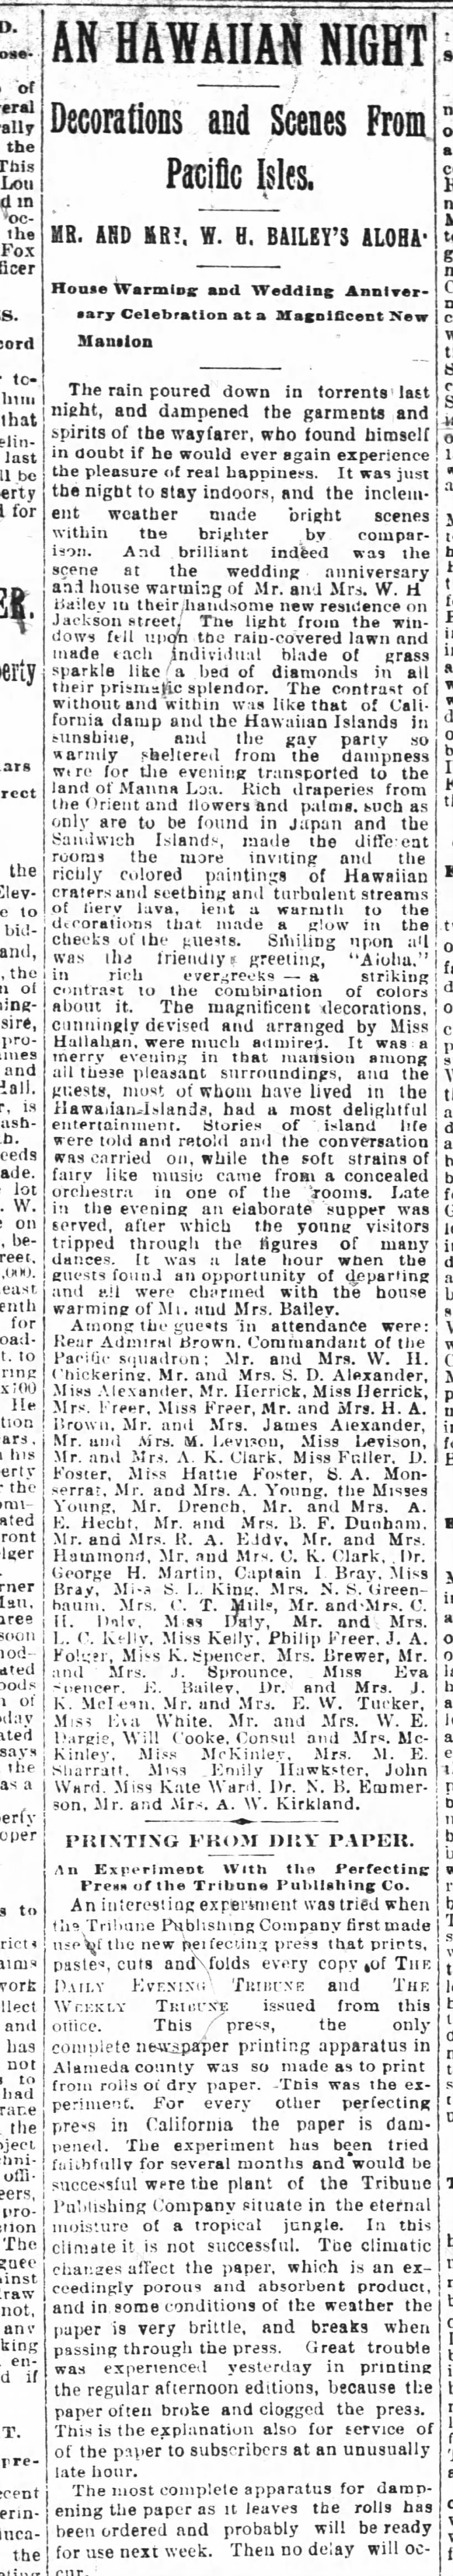 A Hawaiian Night - Oakland Tribune December 30, 1890